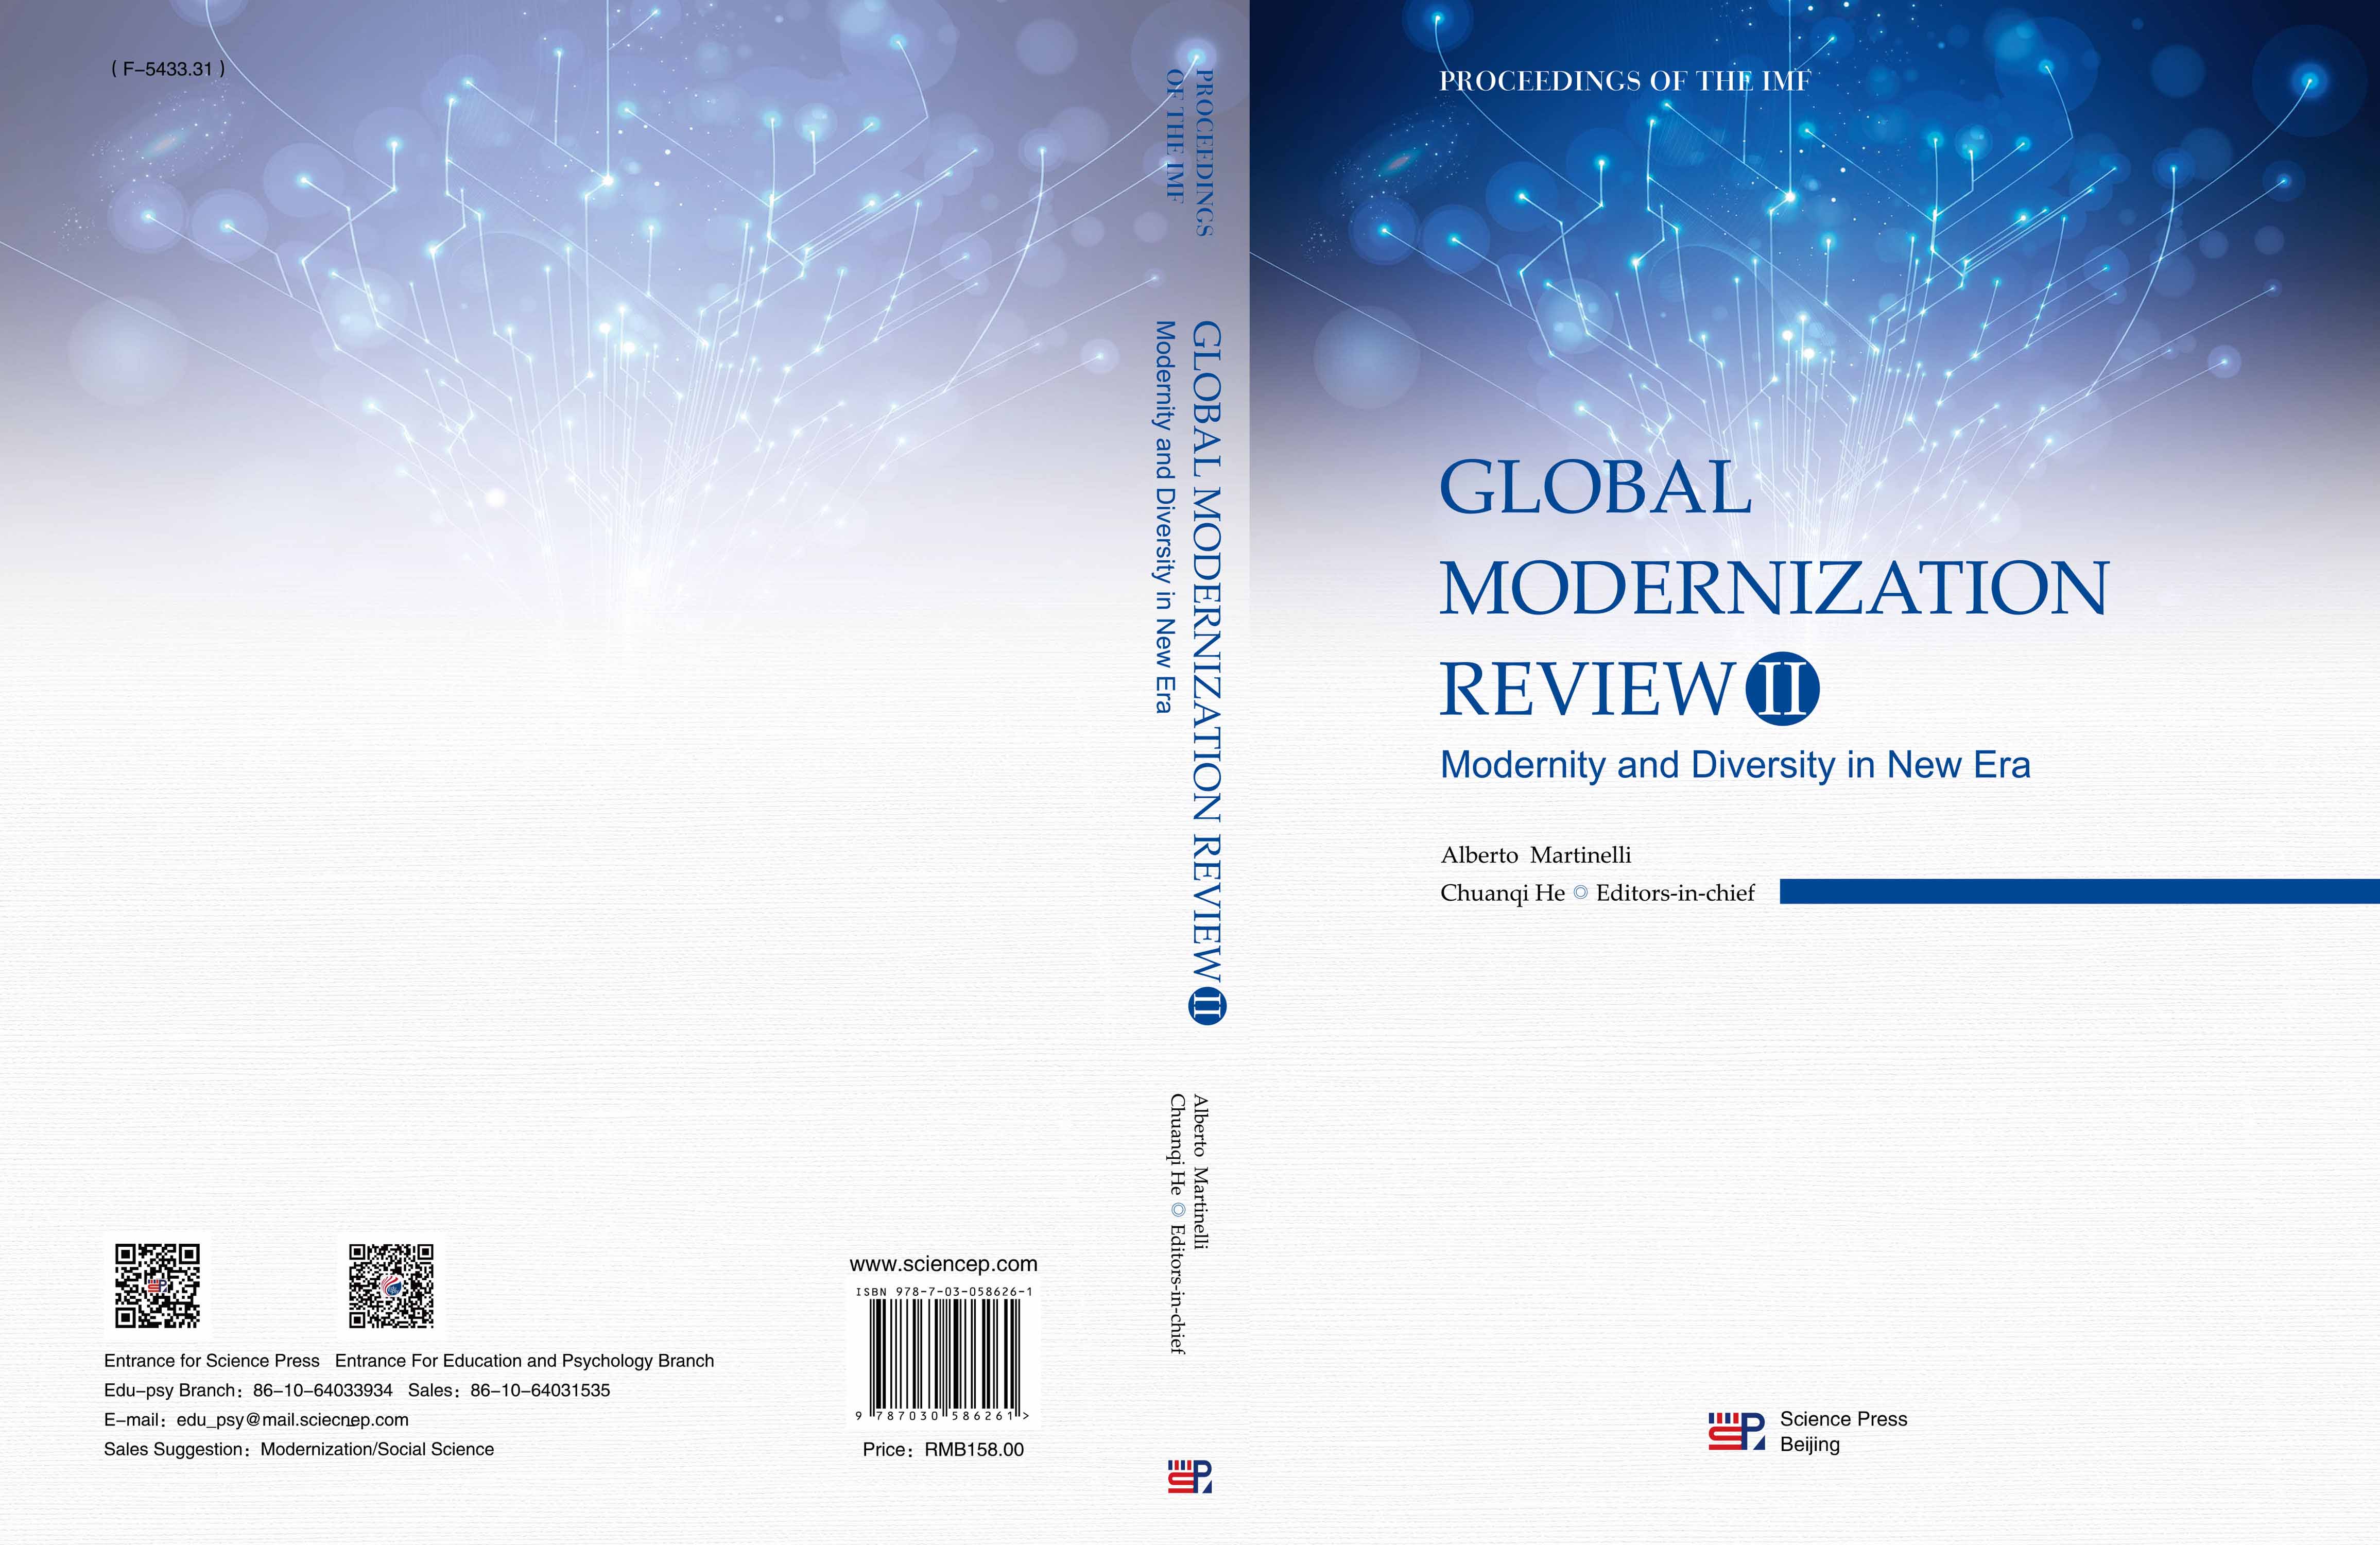 Glibal Modernization Review(II):Modernity and Diversity